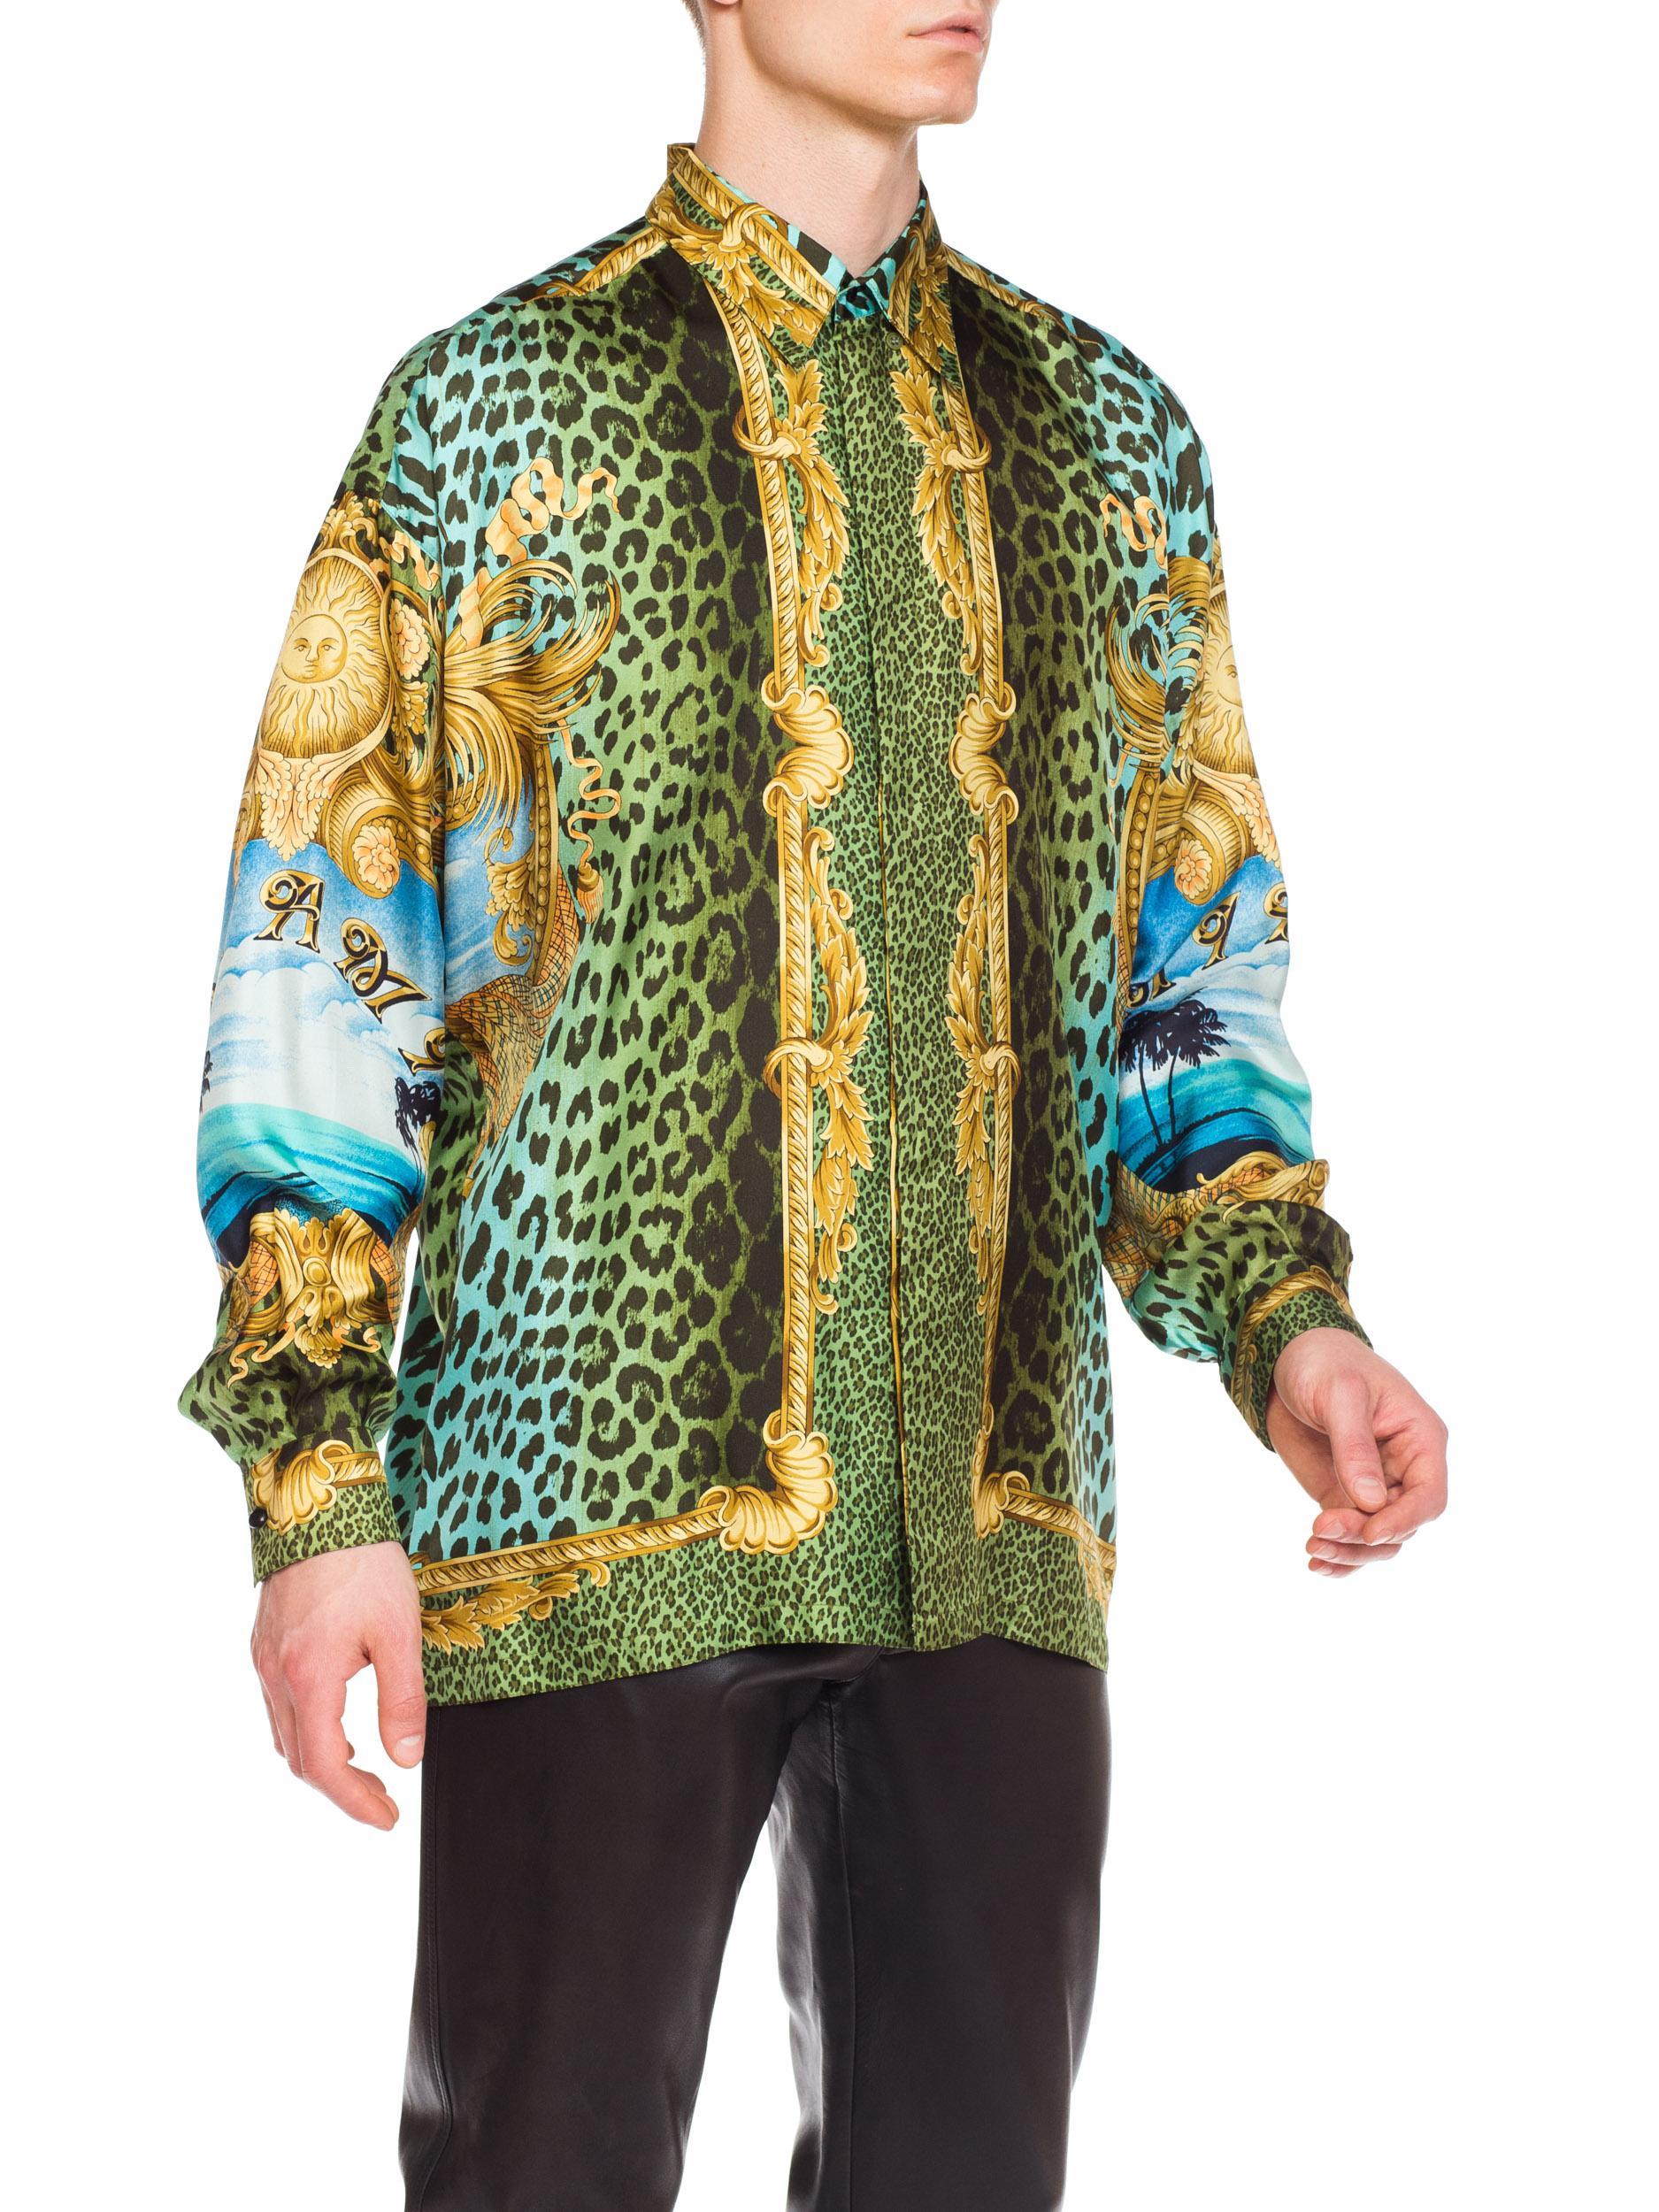 Gianni Versace Miami Leopard Baroque Silk Shirt, 1990s  6